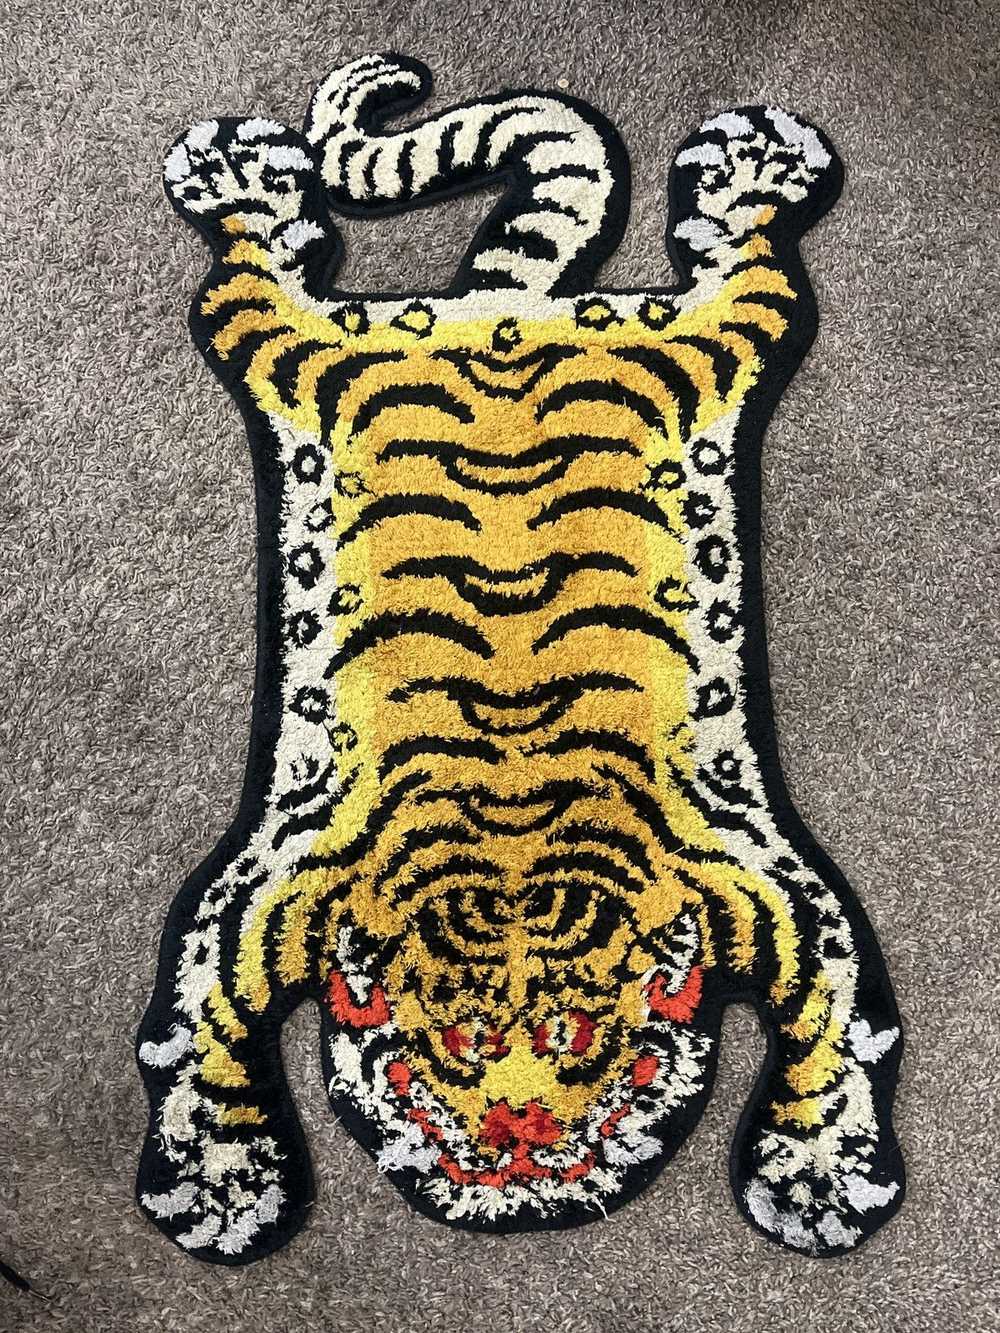 Japanese Brand Tibetan Tiger Rug - image 1